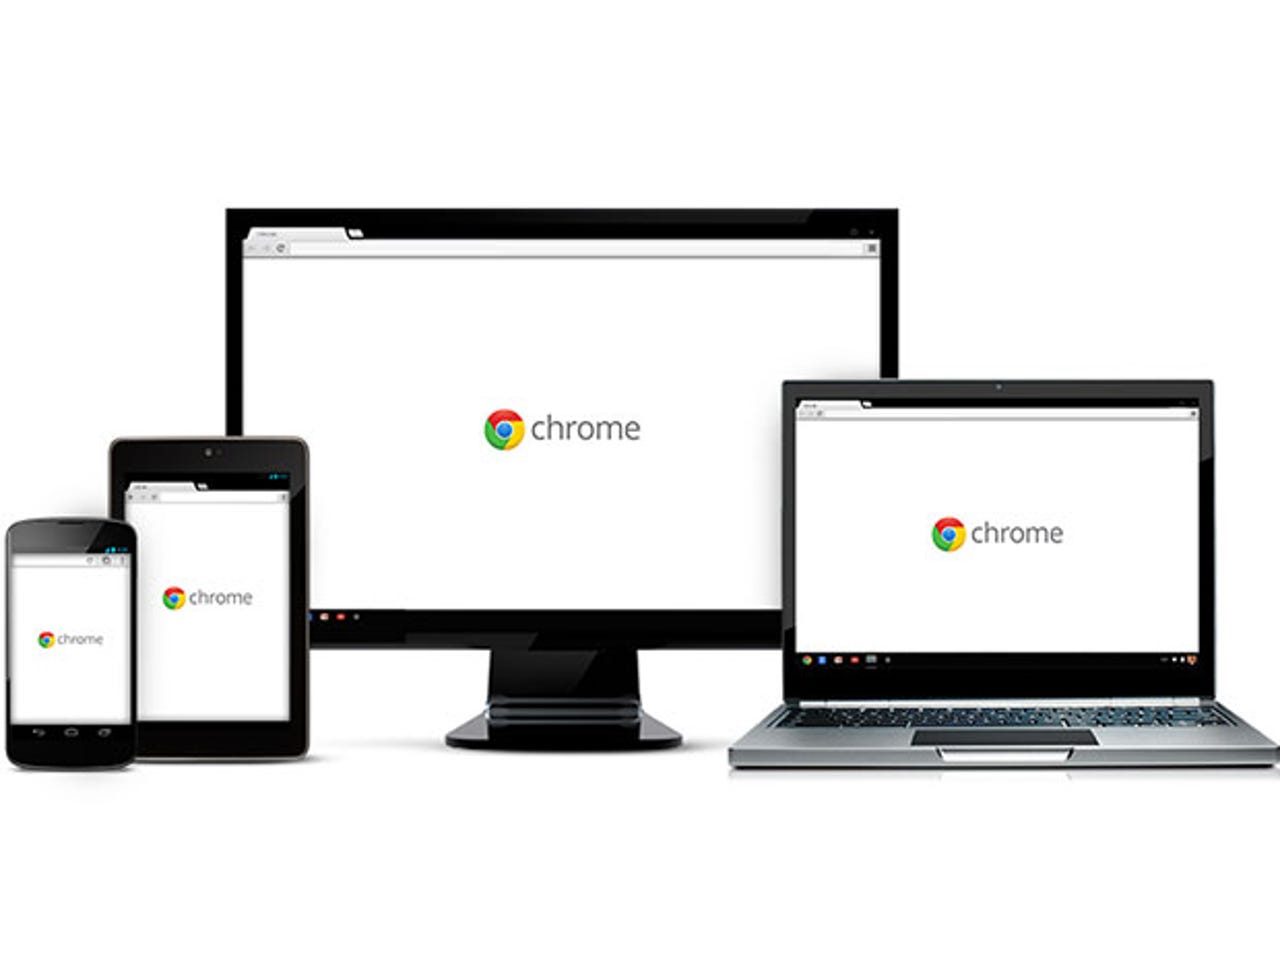 chrome-browser